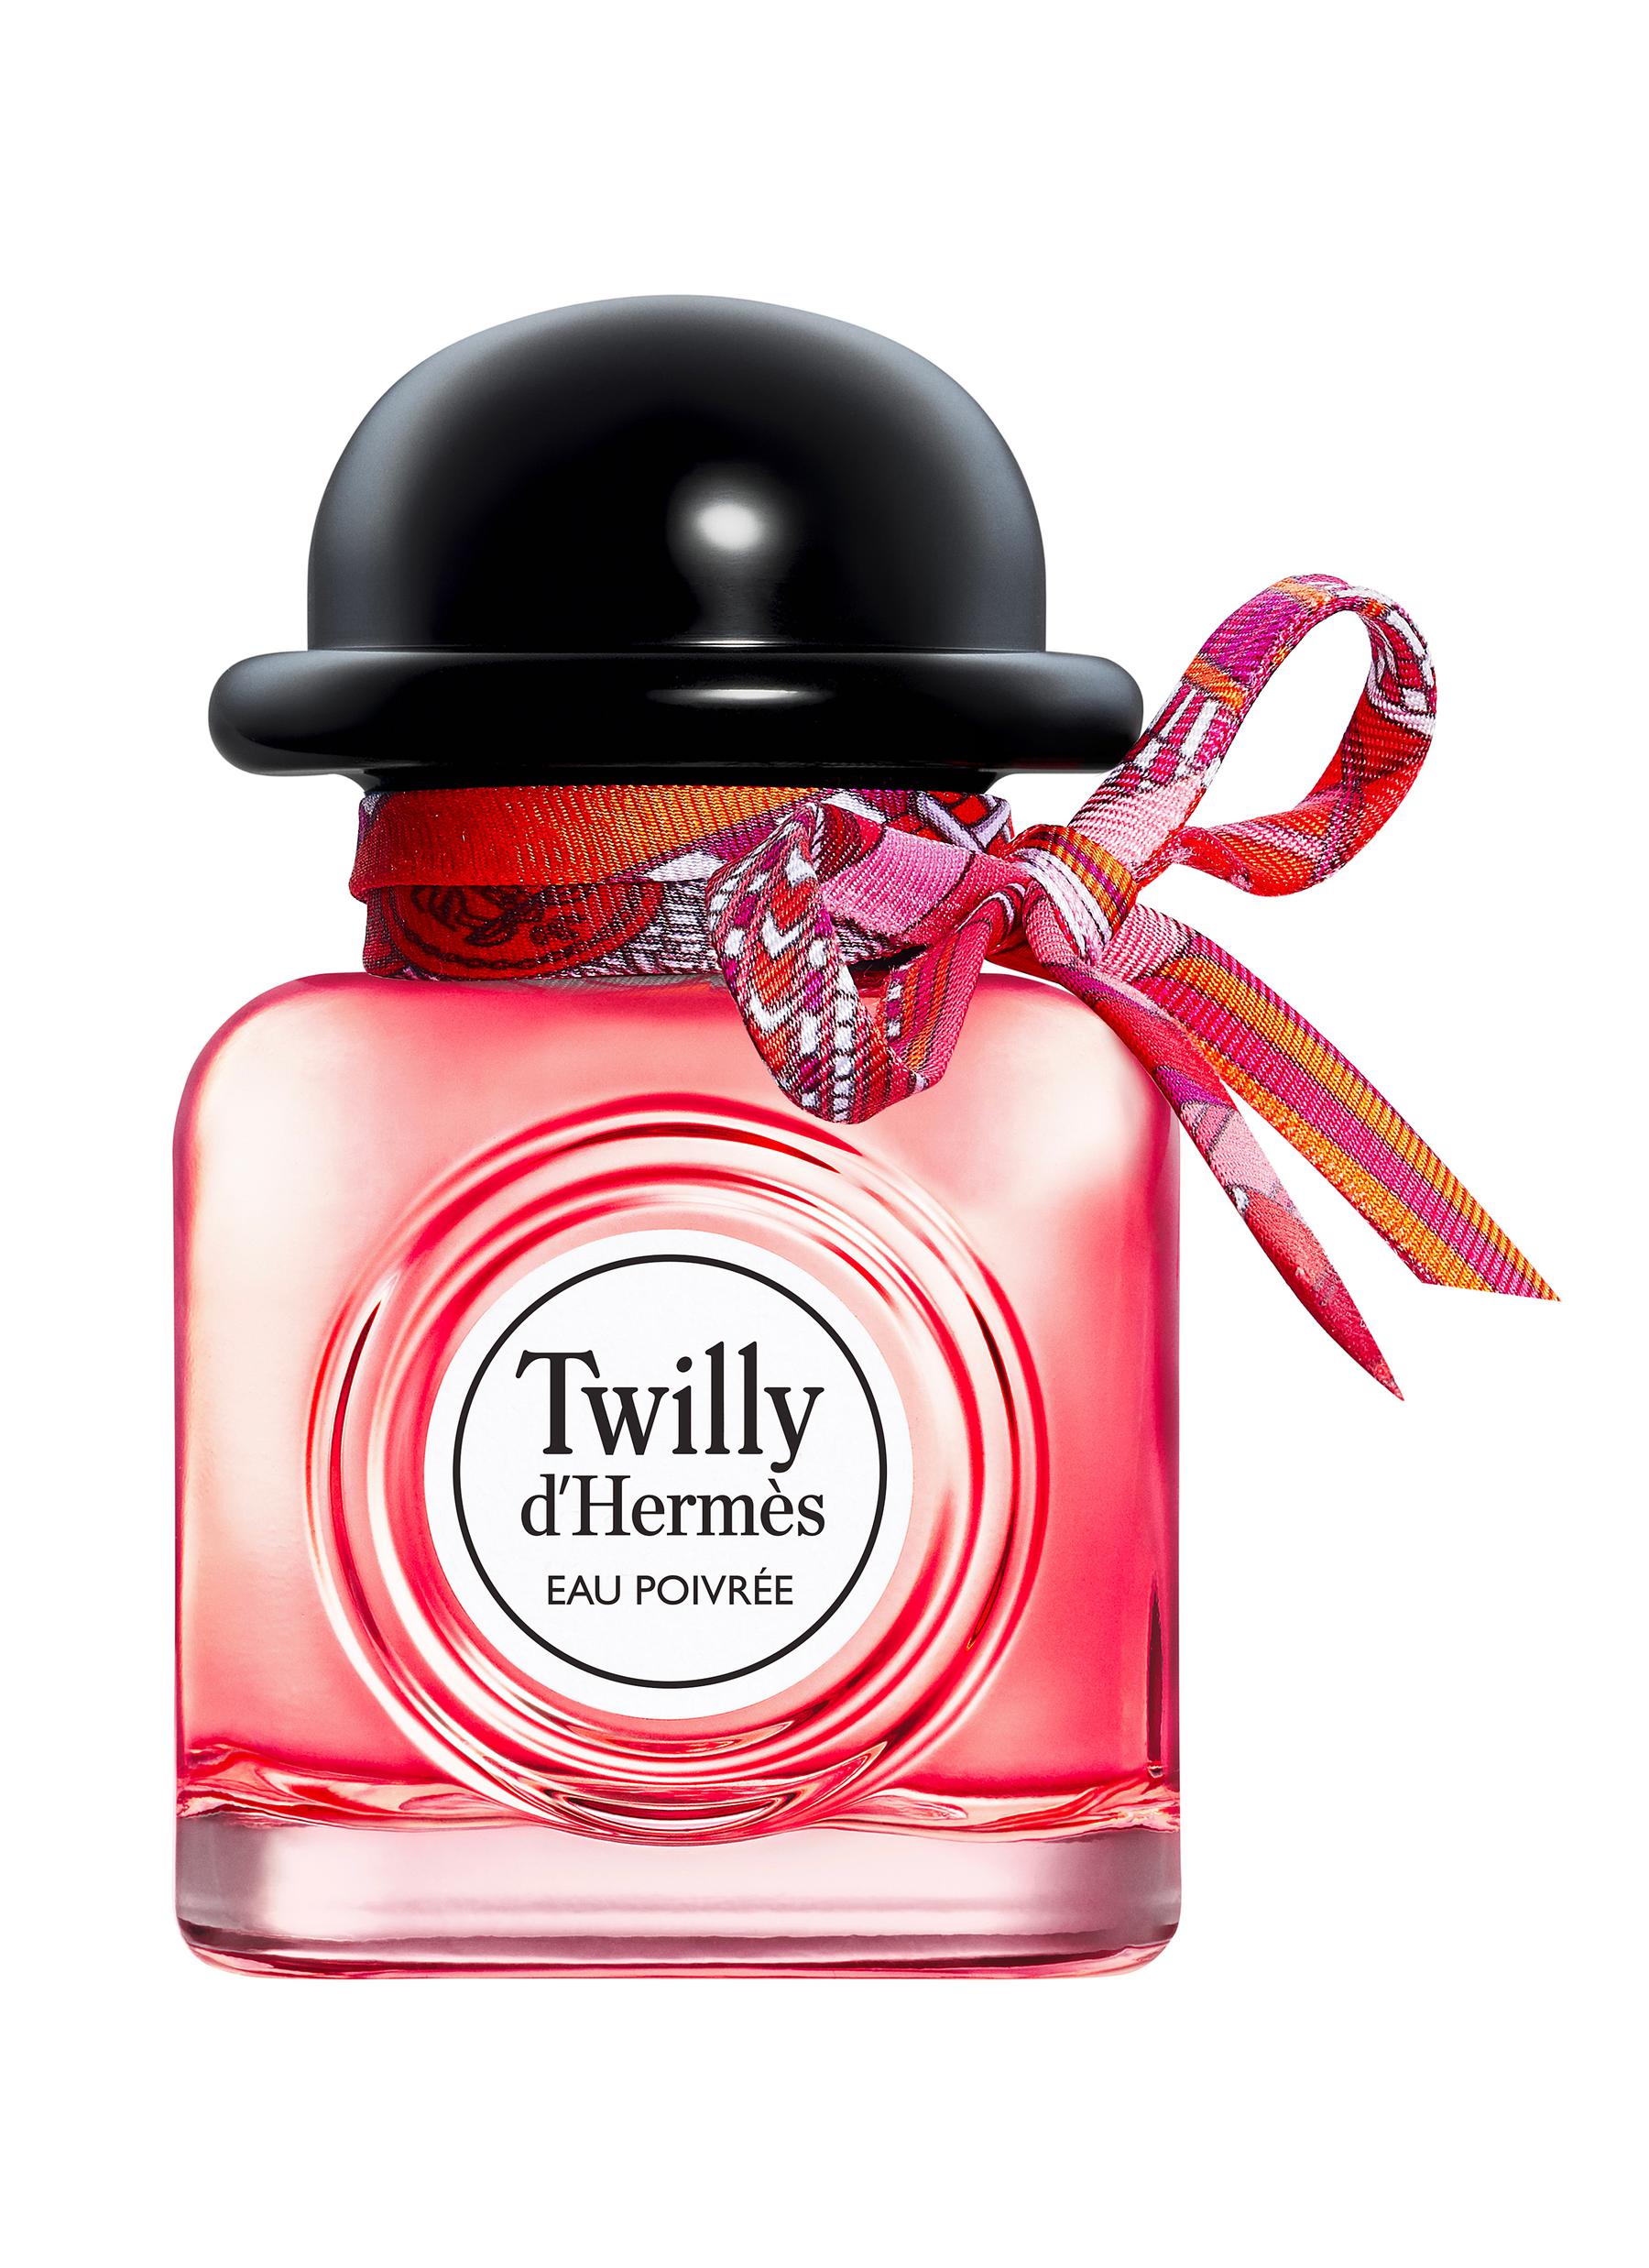 twilly perfume set